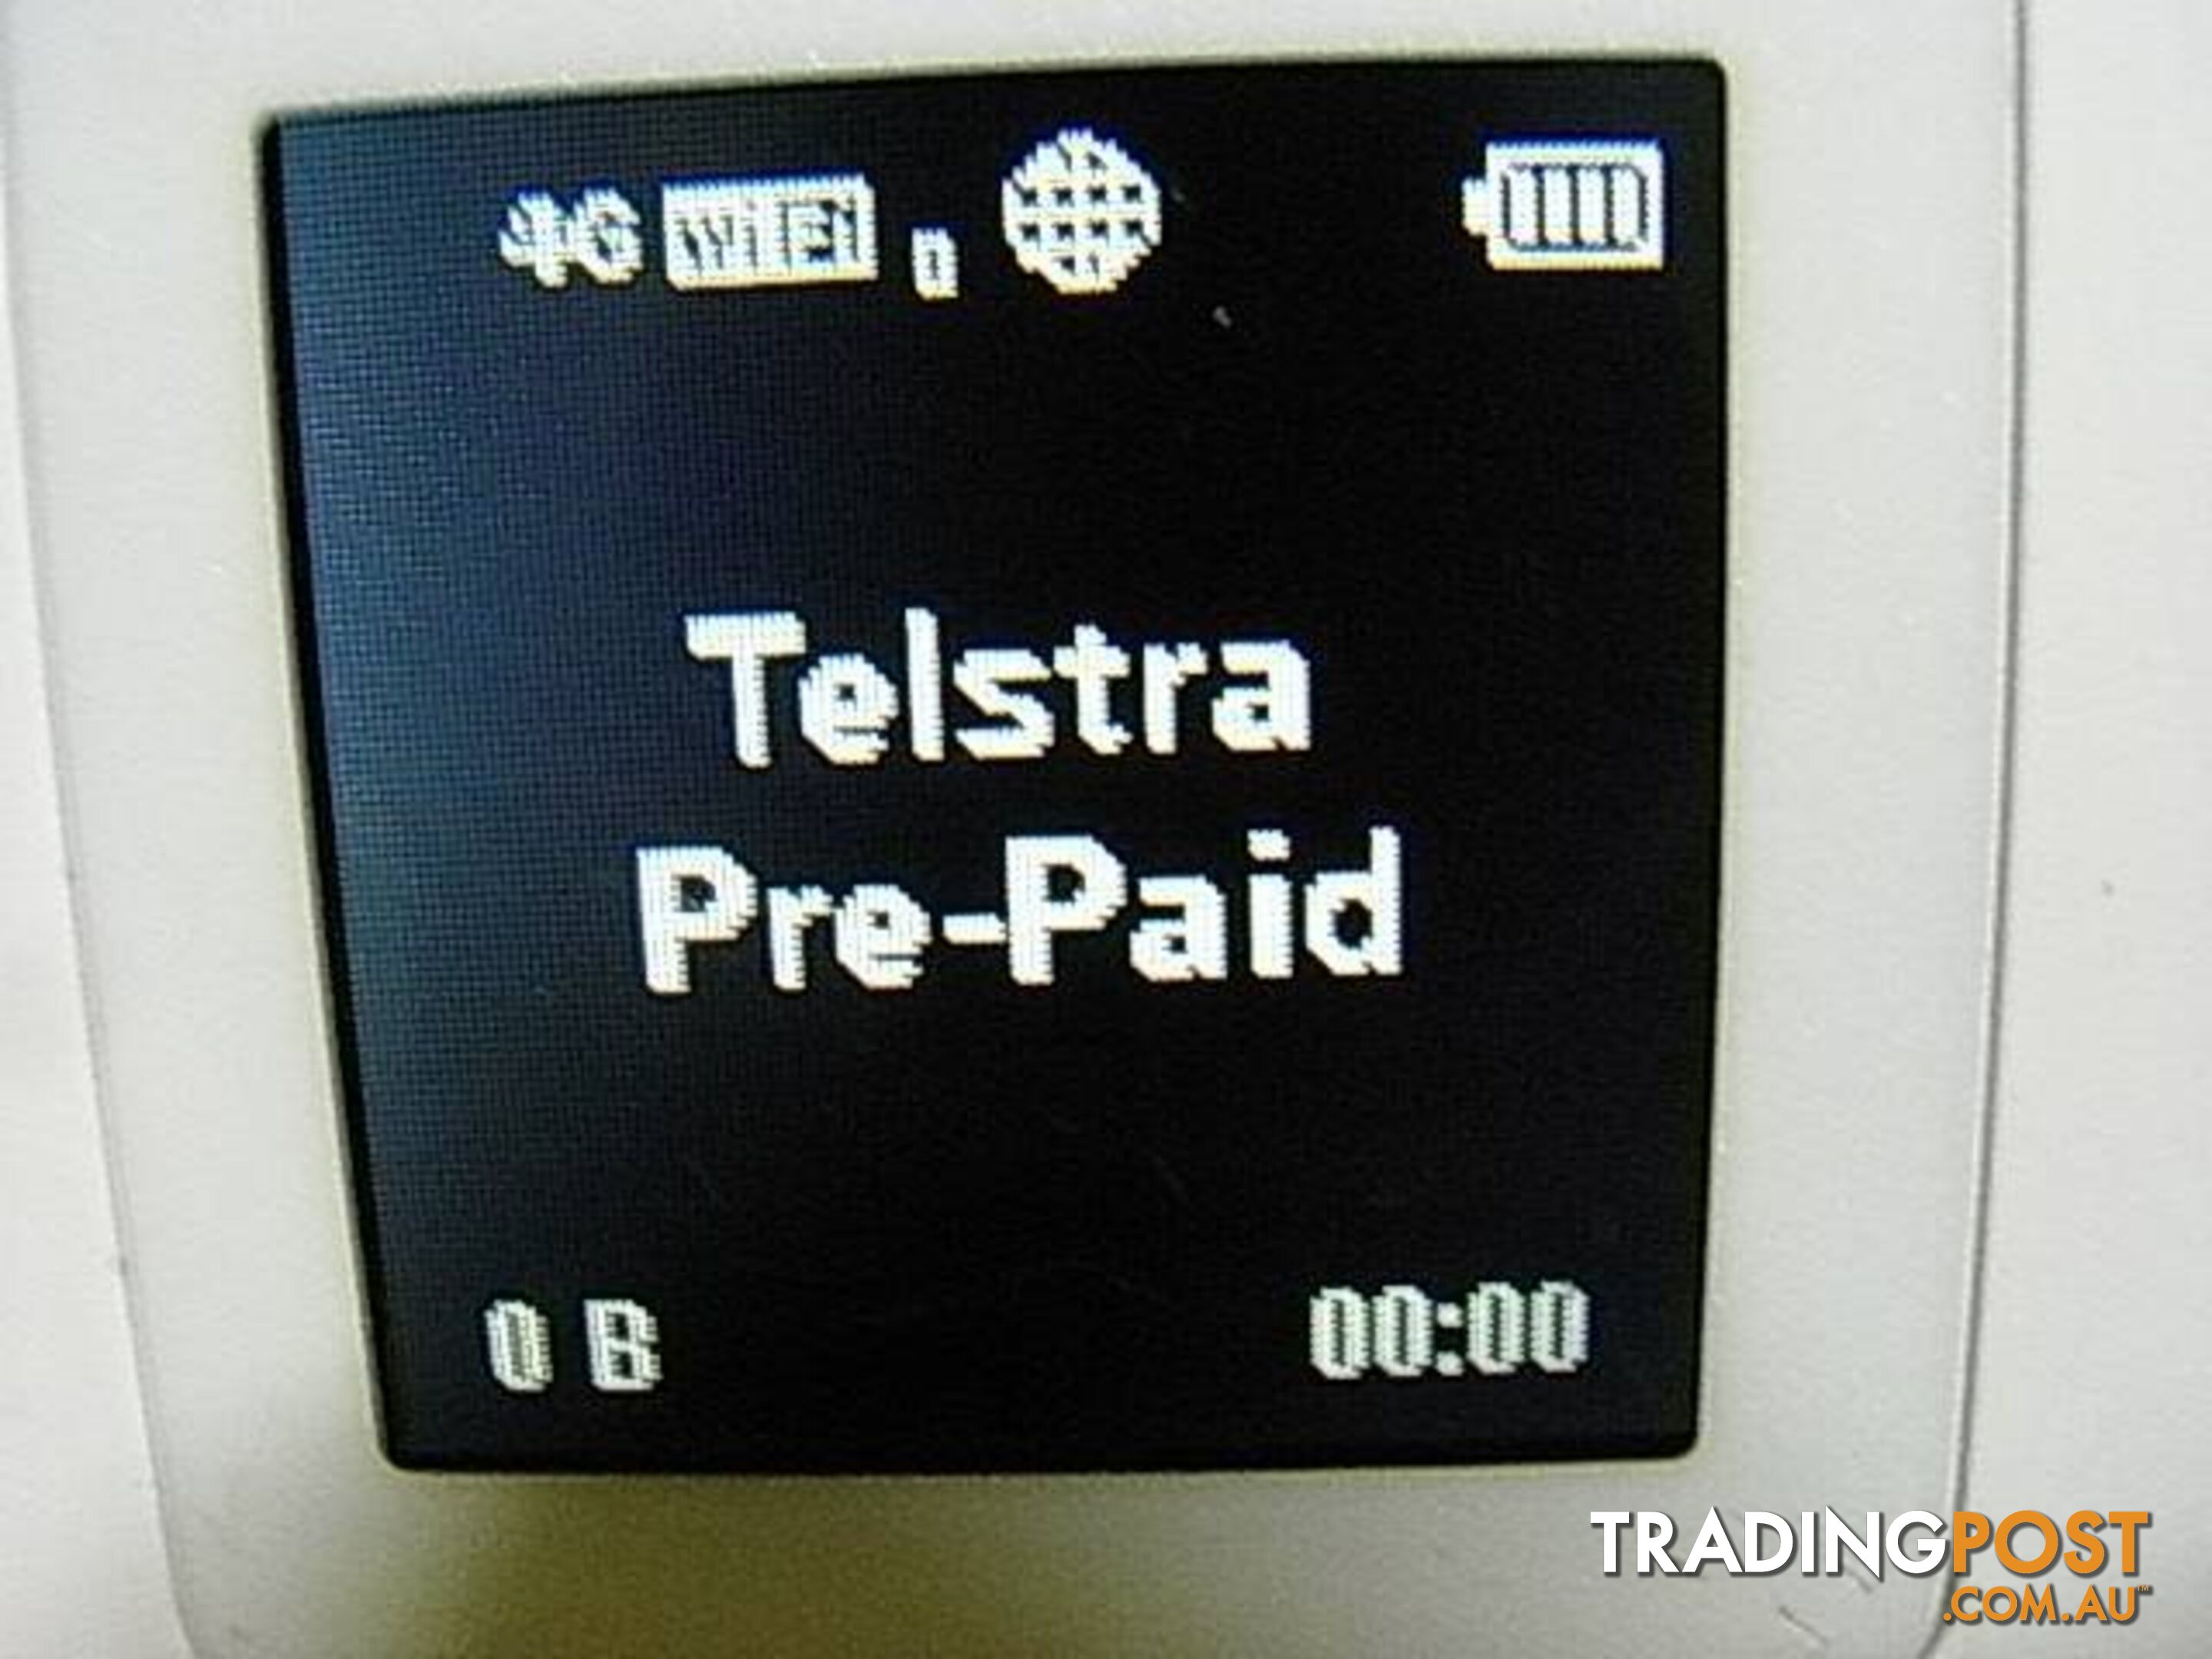 4G Telstra Pre-Paid WiFi HOTSPOT Mobile Broadbandpickup or post.